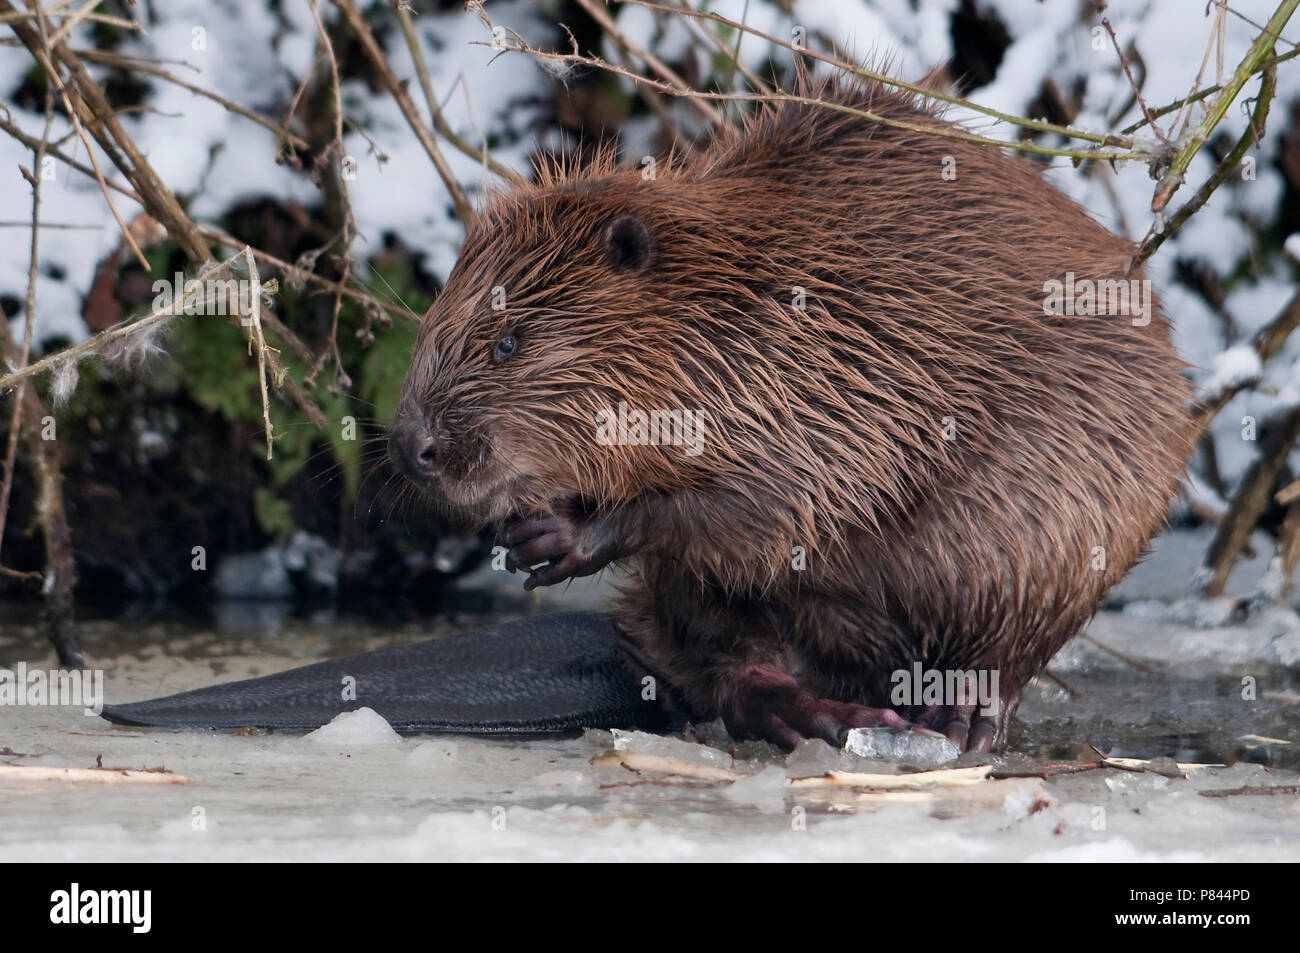 Wilde bever in Gronings natuurgebied; Wild Beaver in Dutch Nature reserve Stock Photo